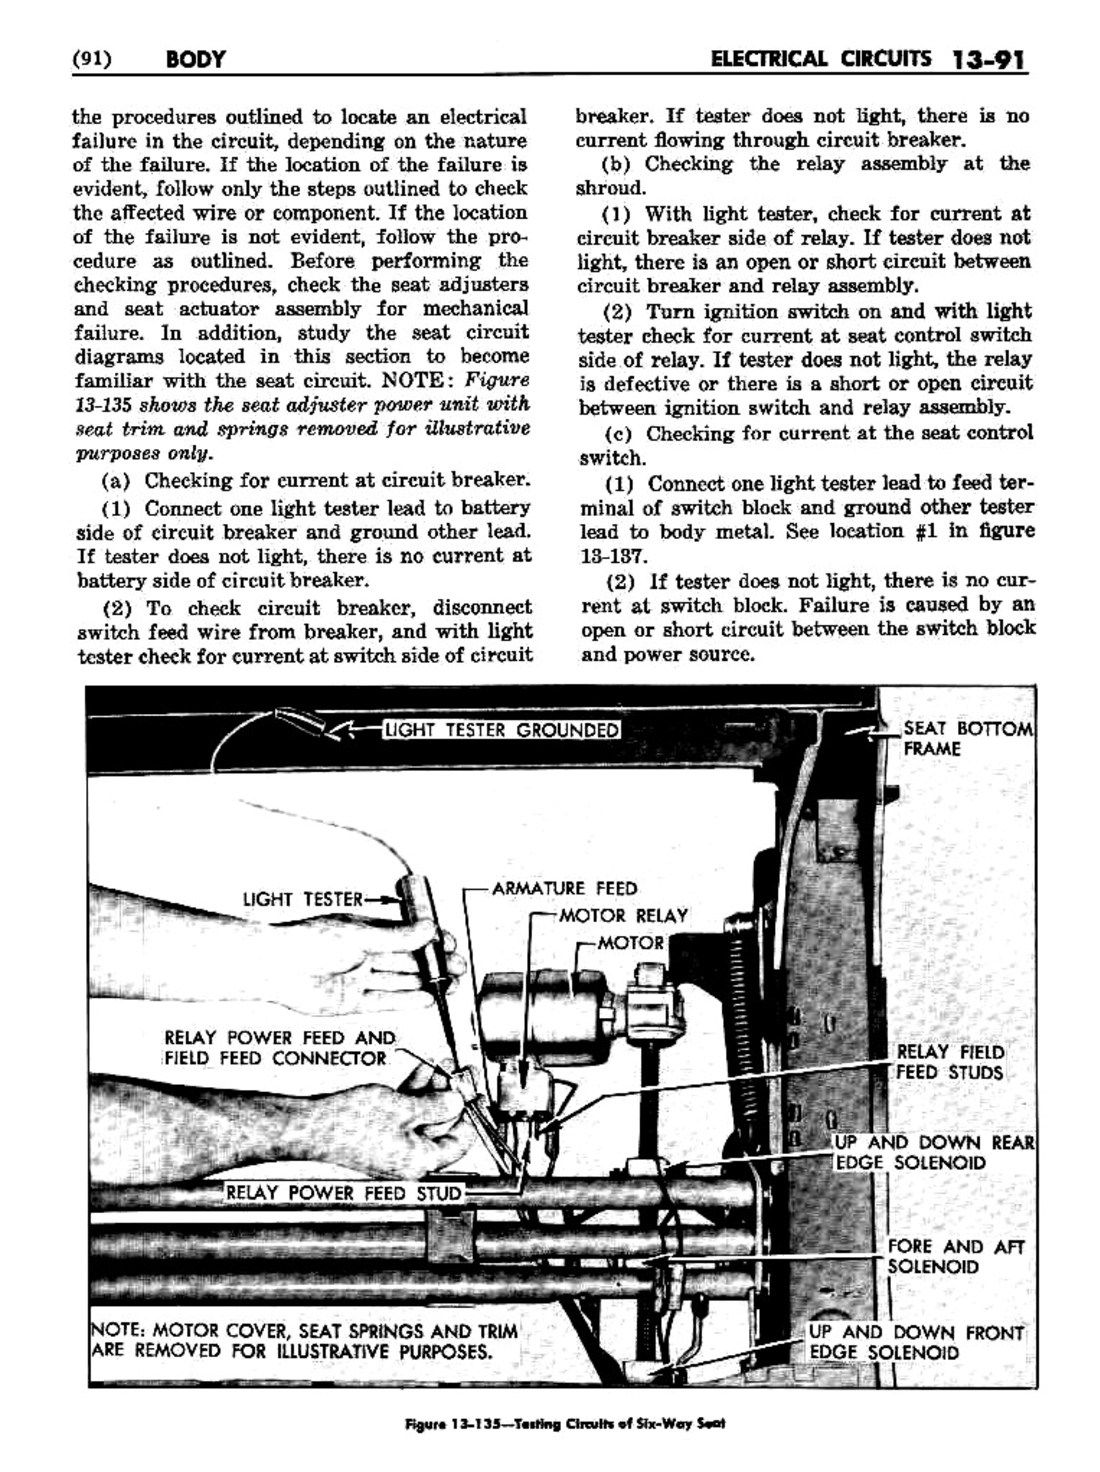 n_1957 Buick Body Service Manual-093-093.jpg